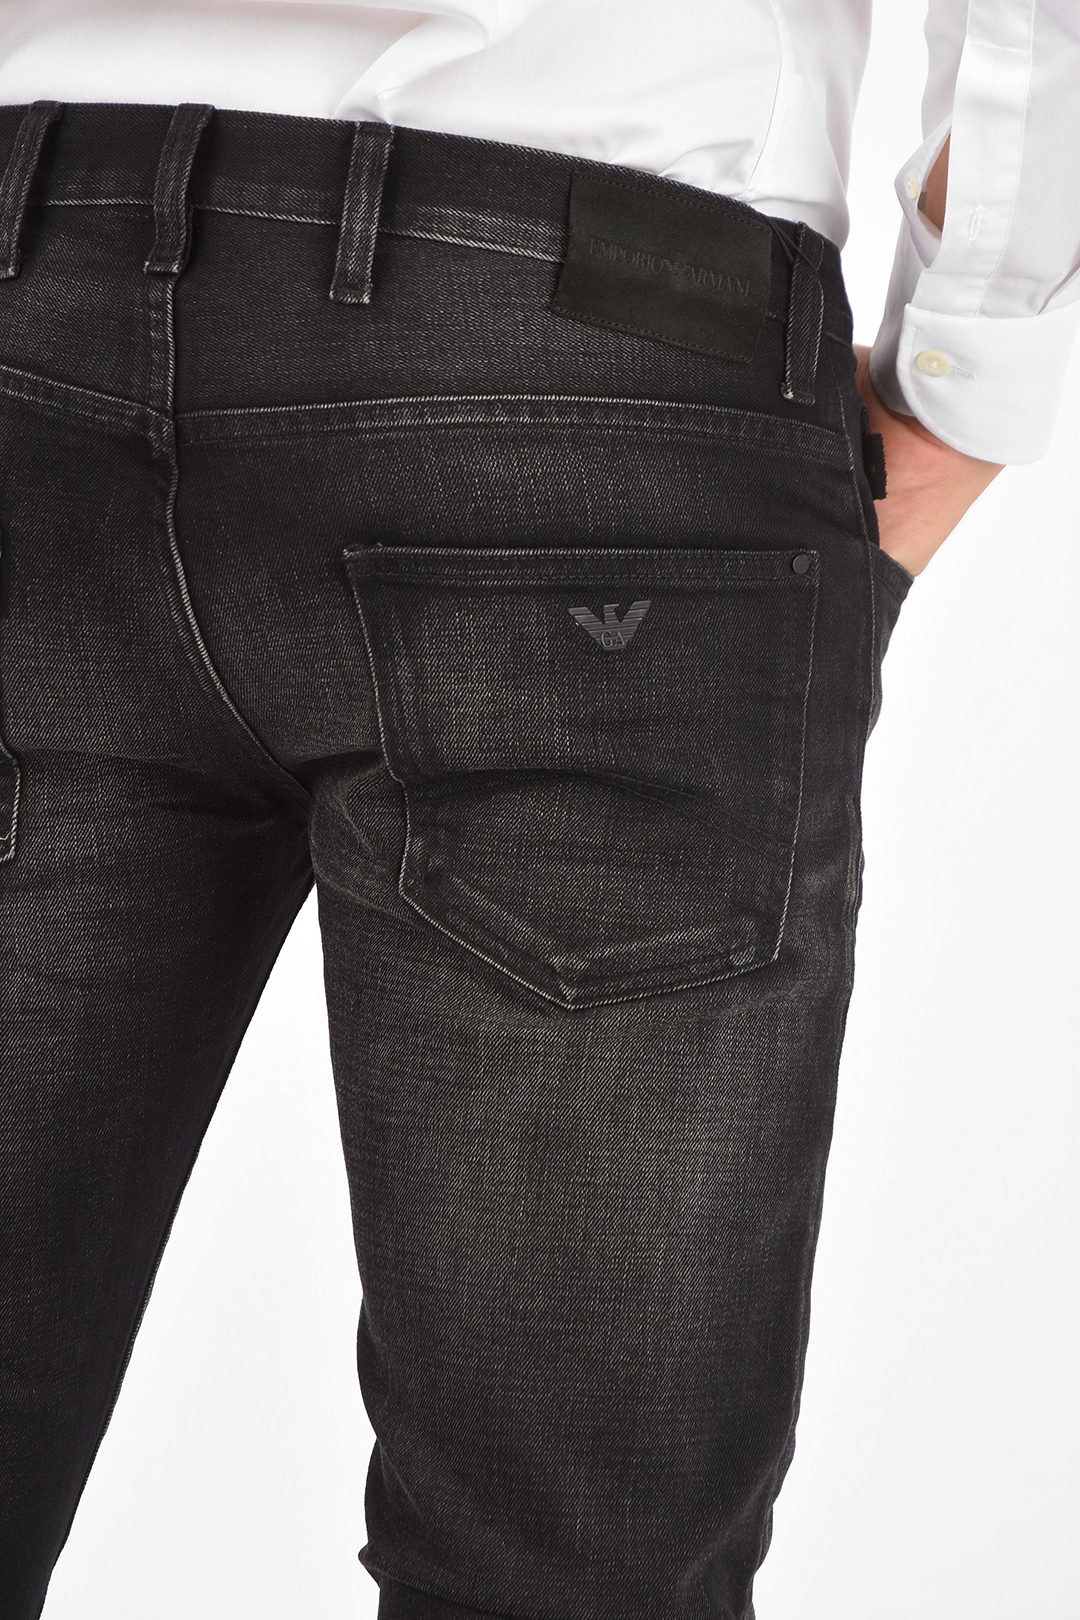 Armani EMPORIO ARMANI 16cm Denim Slik Fit Jeans herren - Outlet